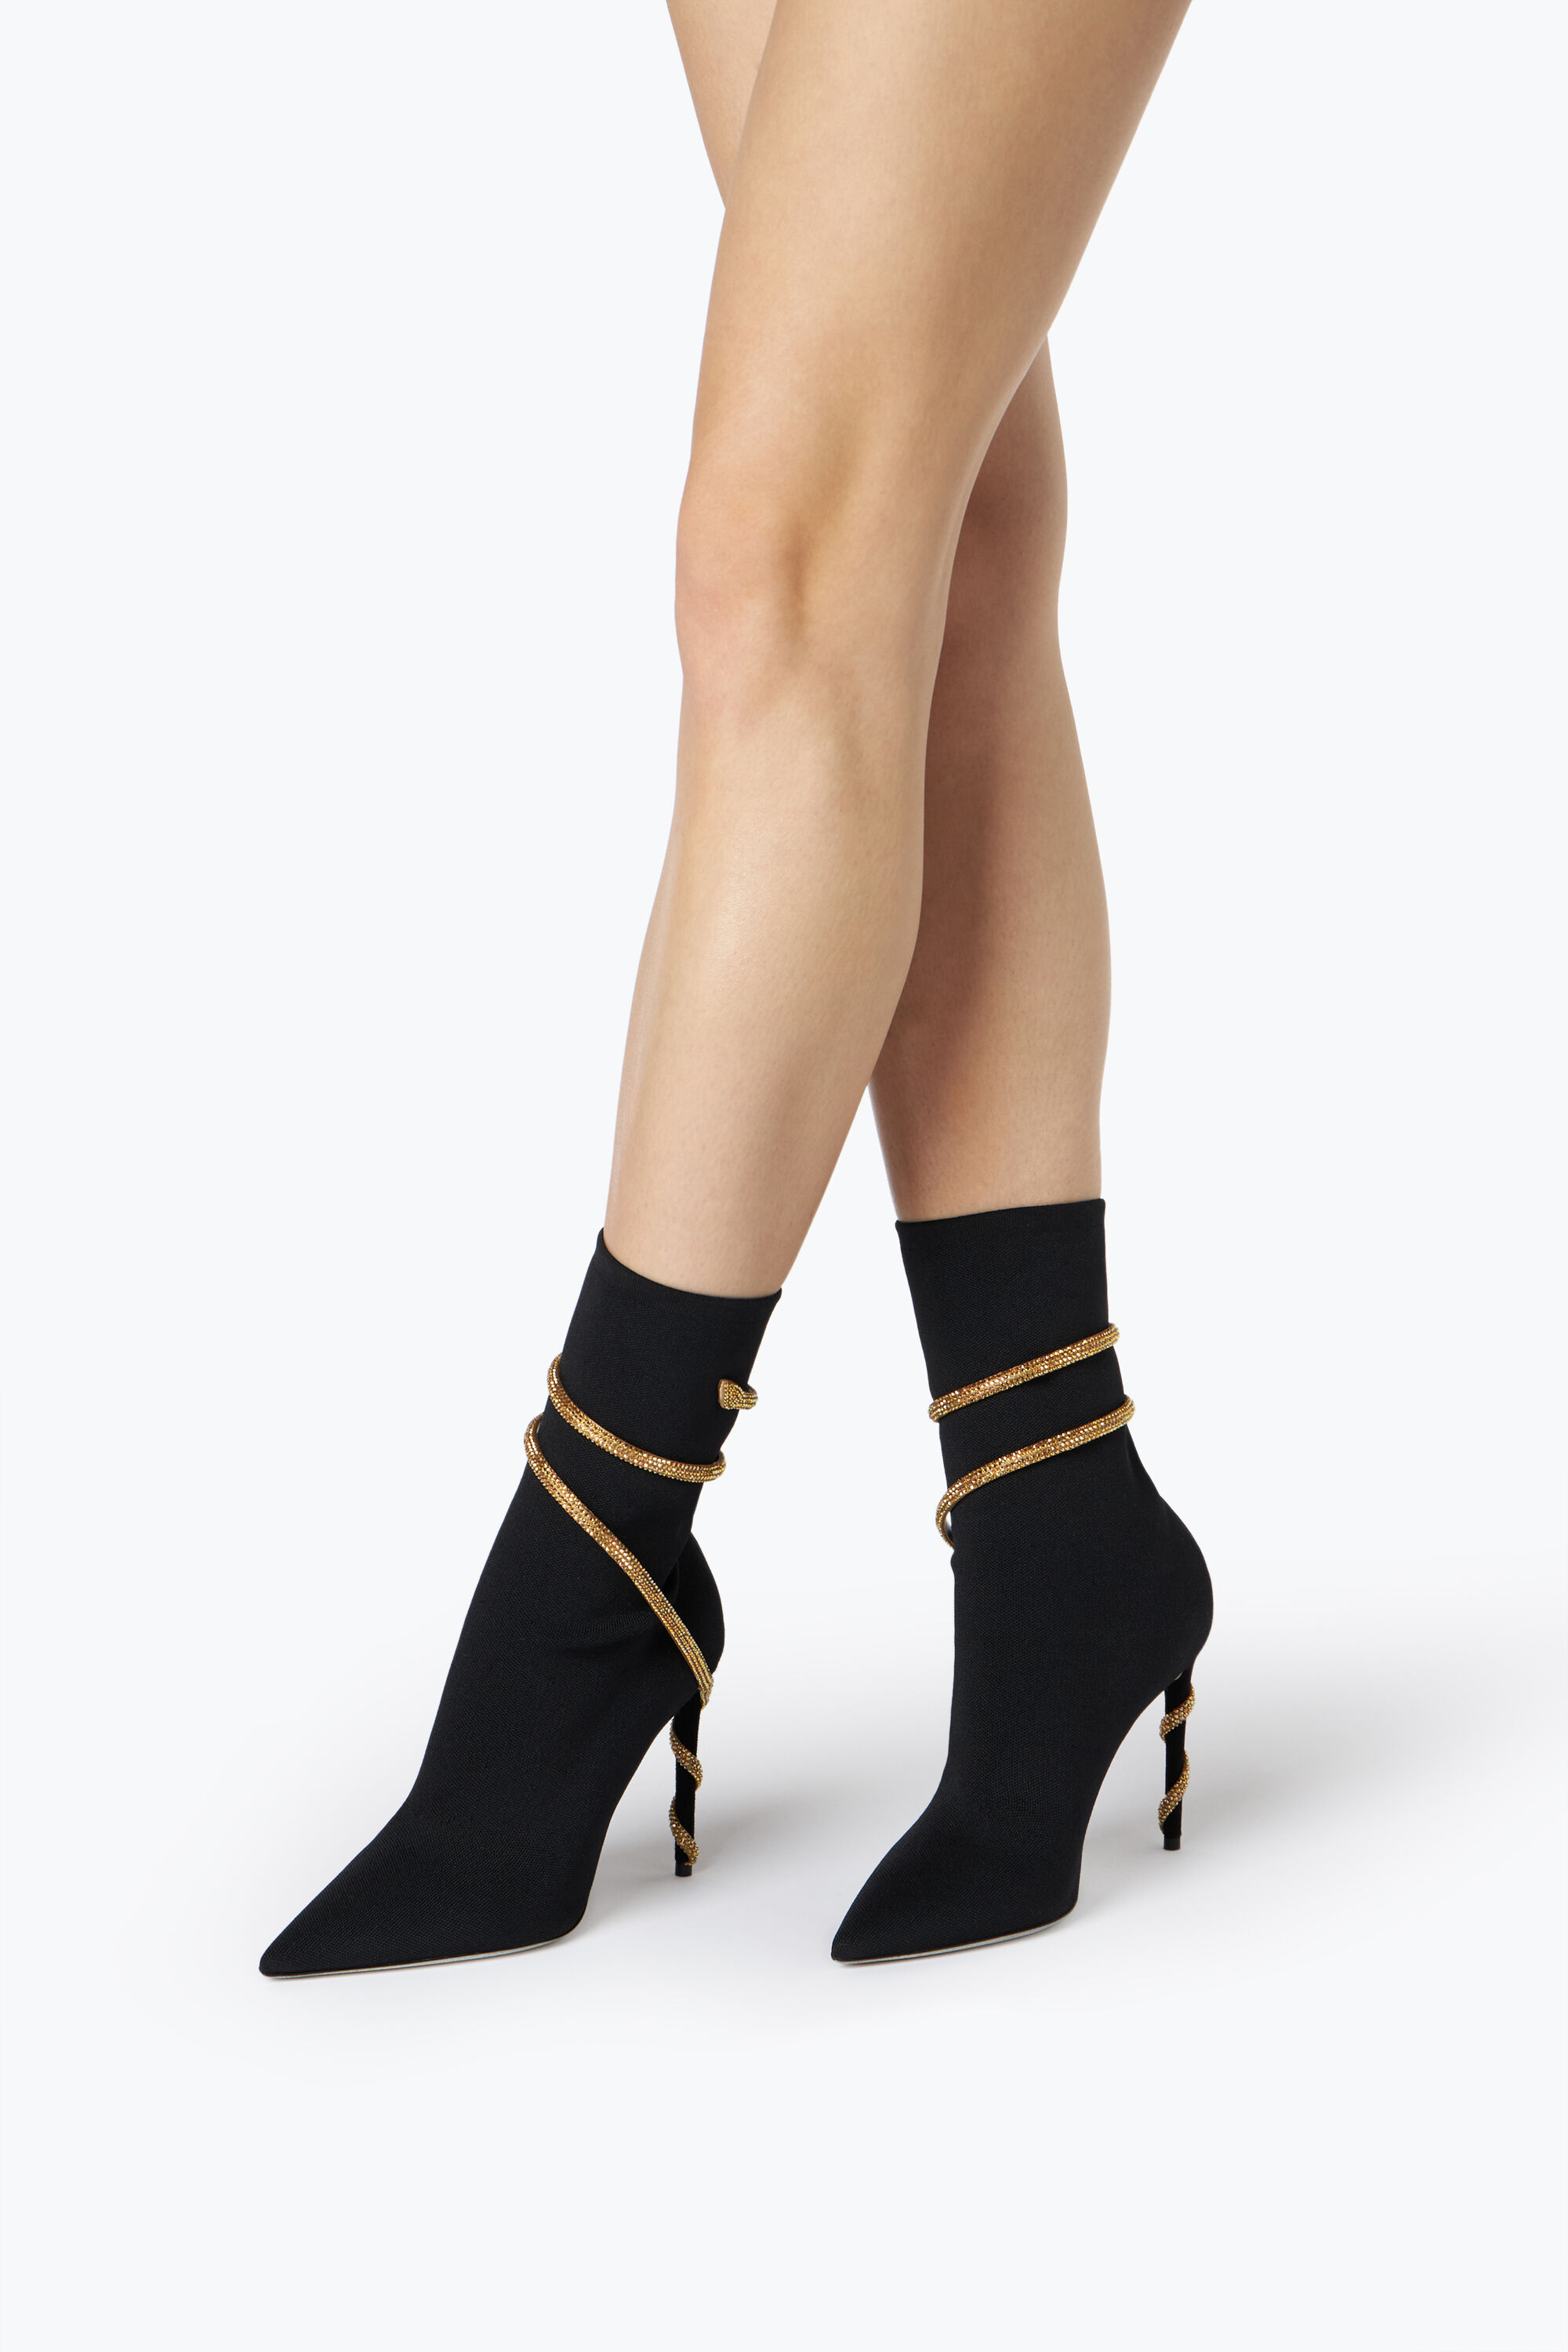 Black & Gold Heel Pumps | ShopLook | Black and gold shoes, Gold and black  heels, Pumps heels